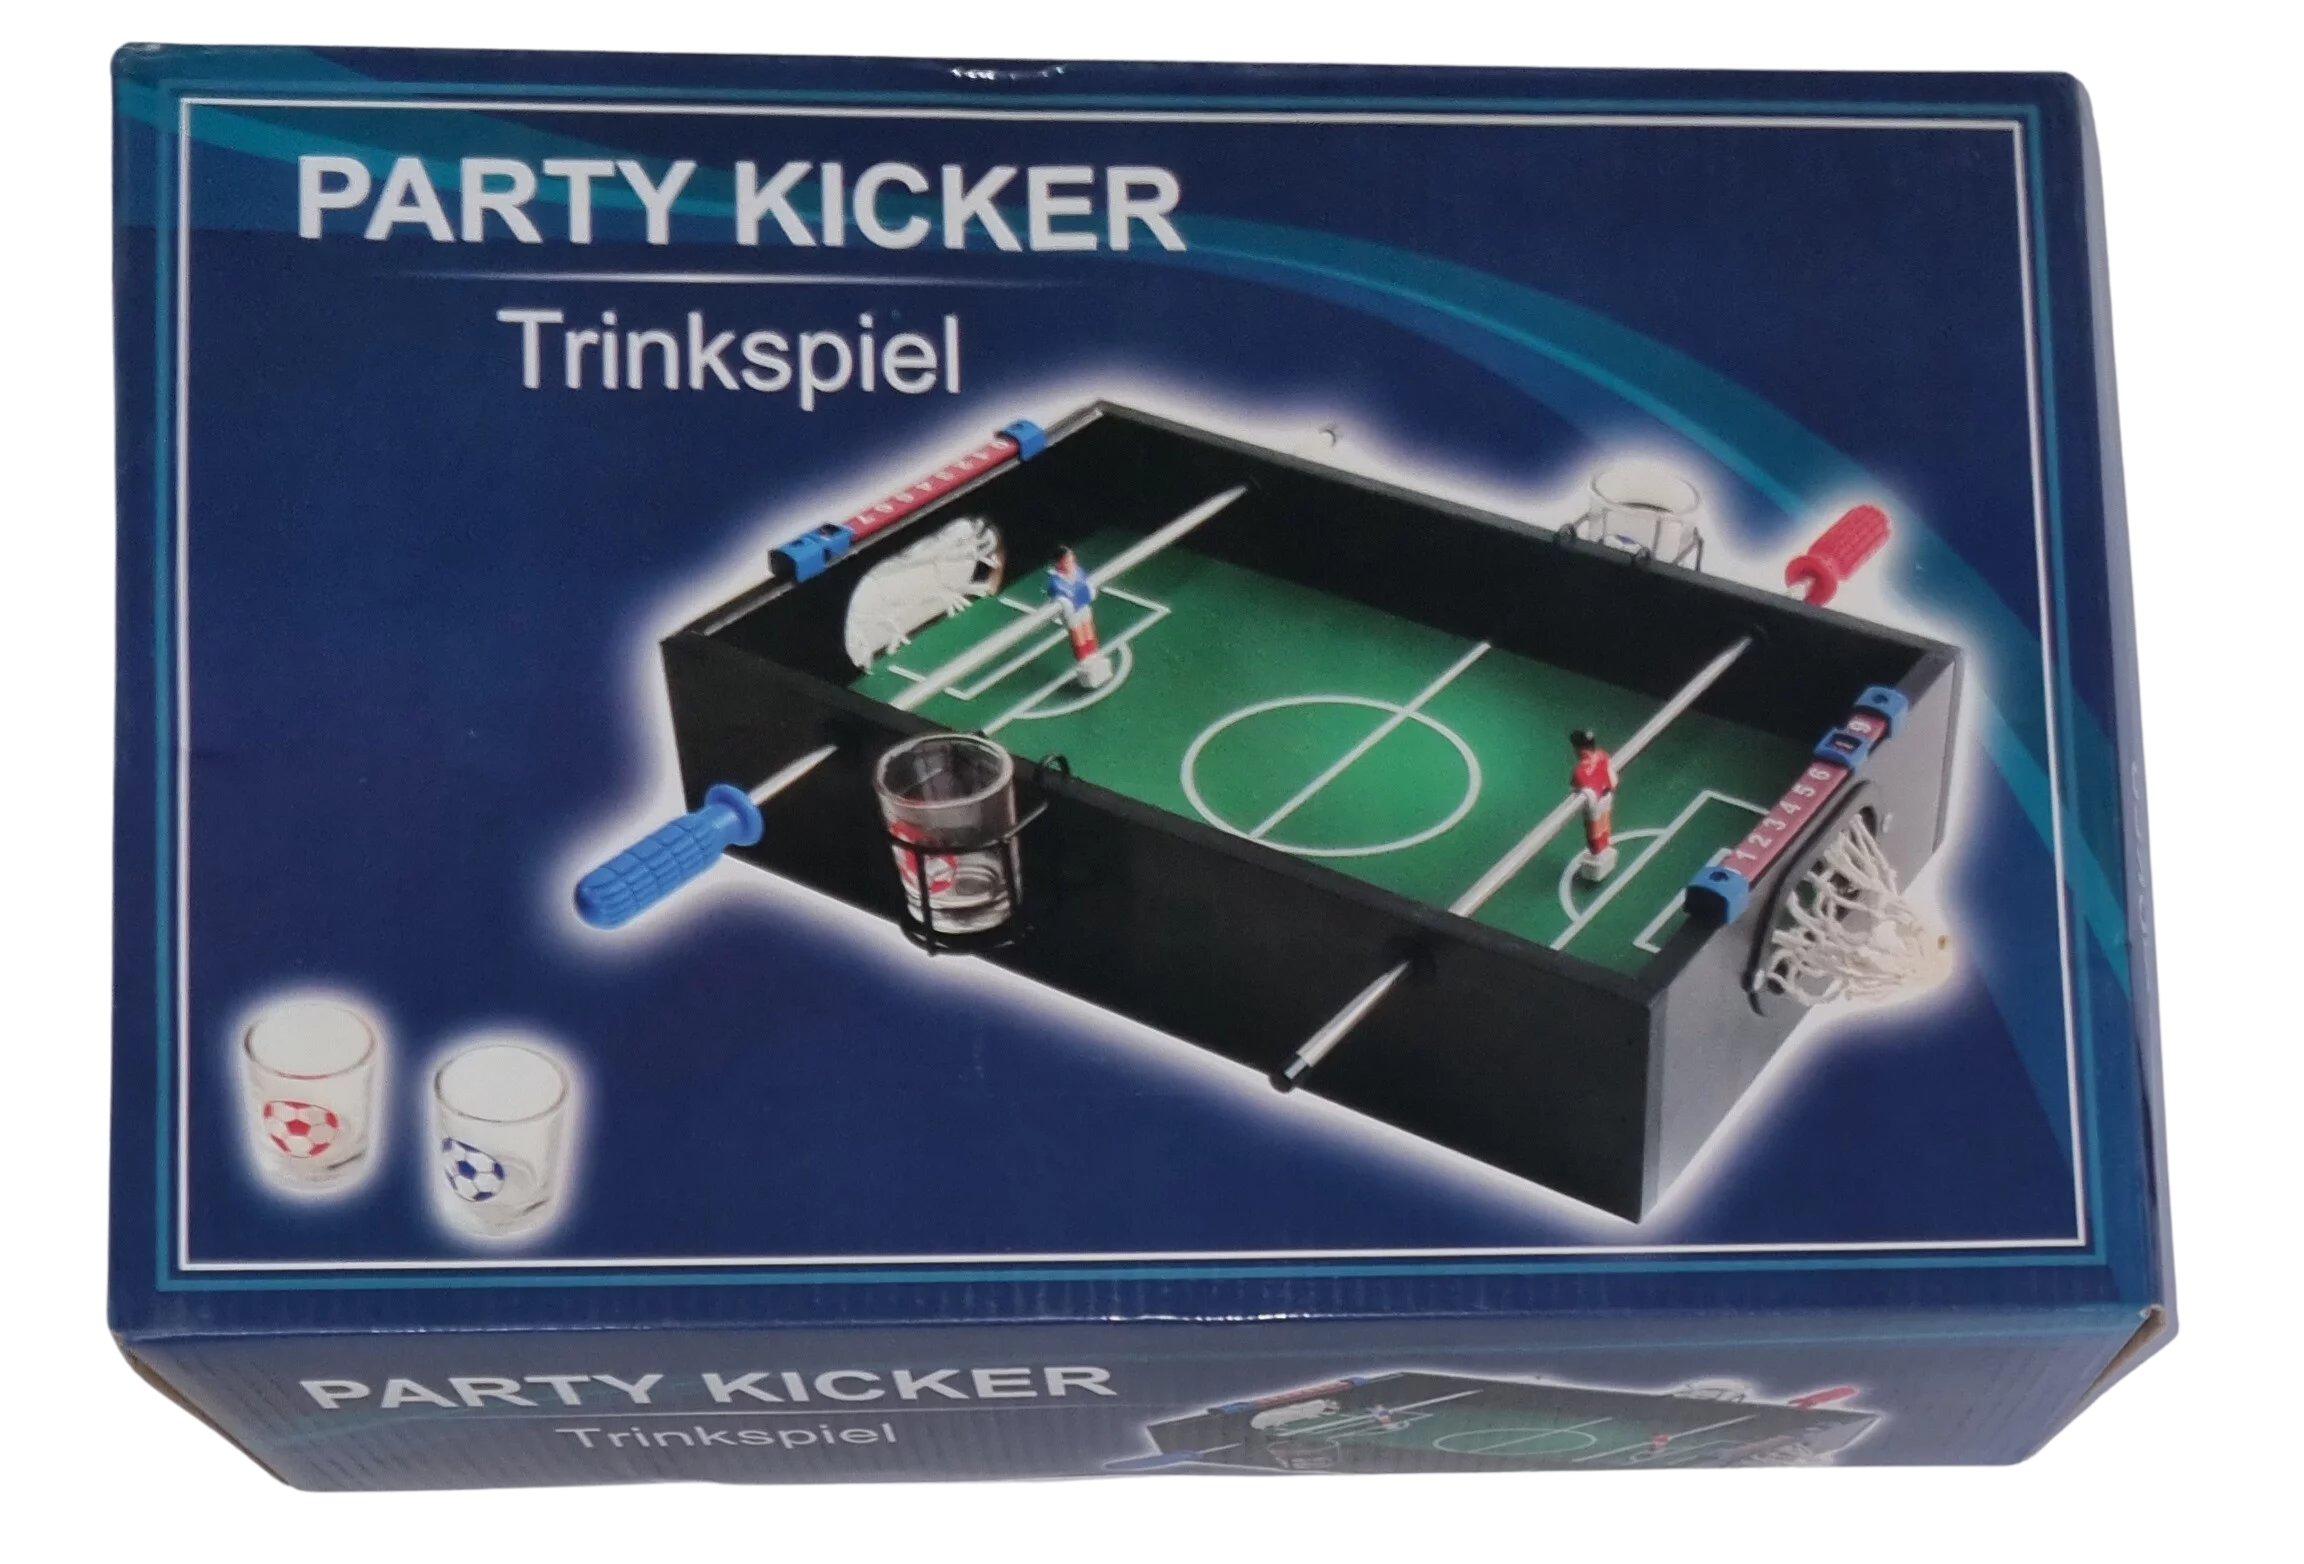 Party Kicker Trinkpiel